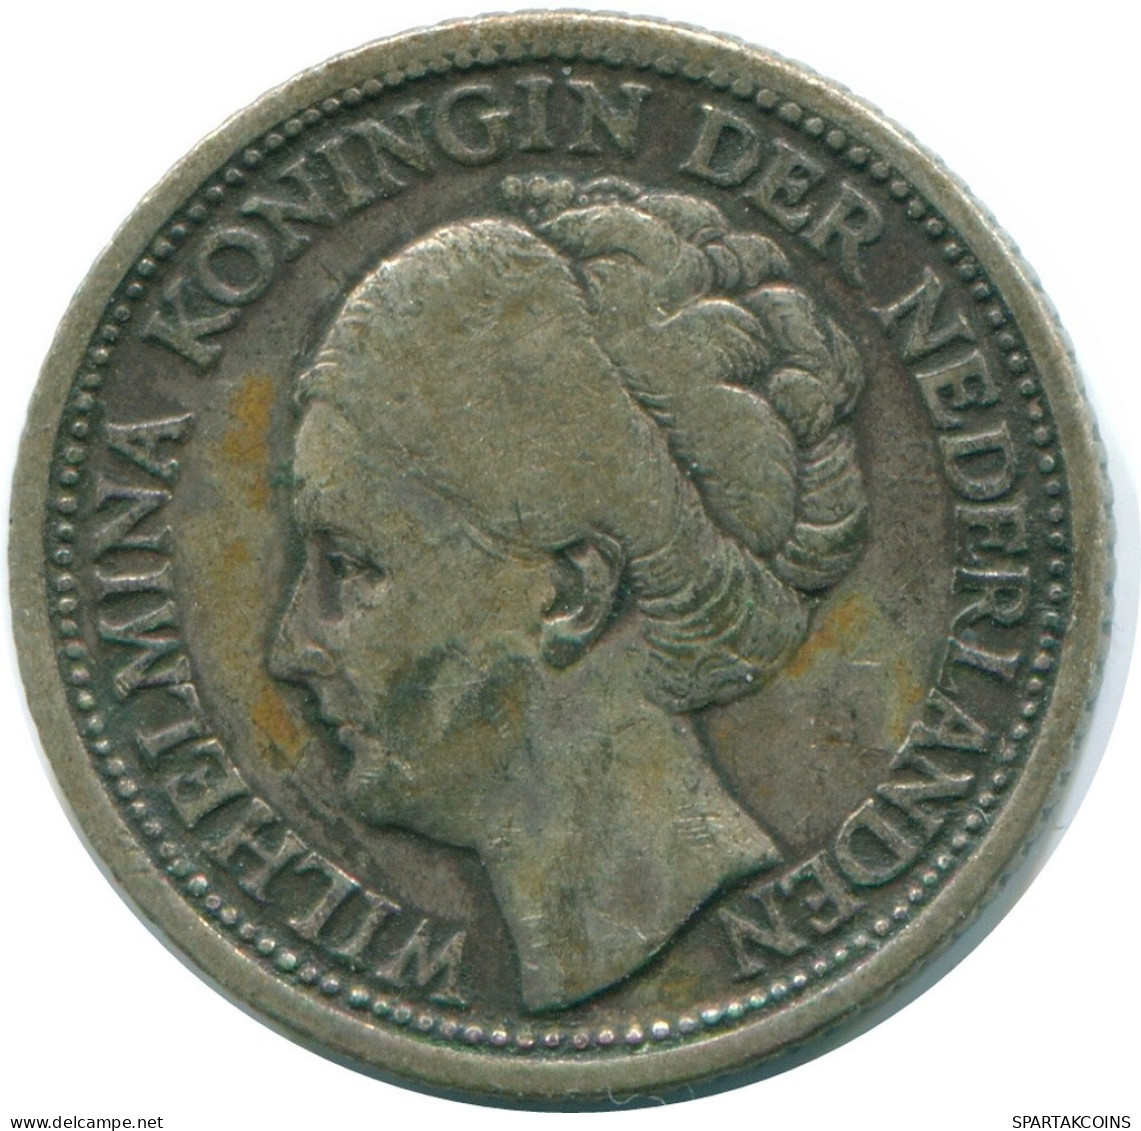 1/4 GULDEN 1944 CURACAO Netherlands SILVER Colonial Coin #NL10586.4.U.A - Curacao